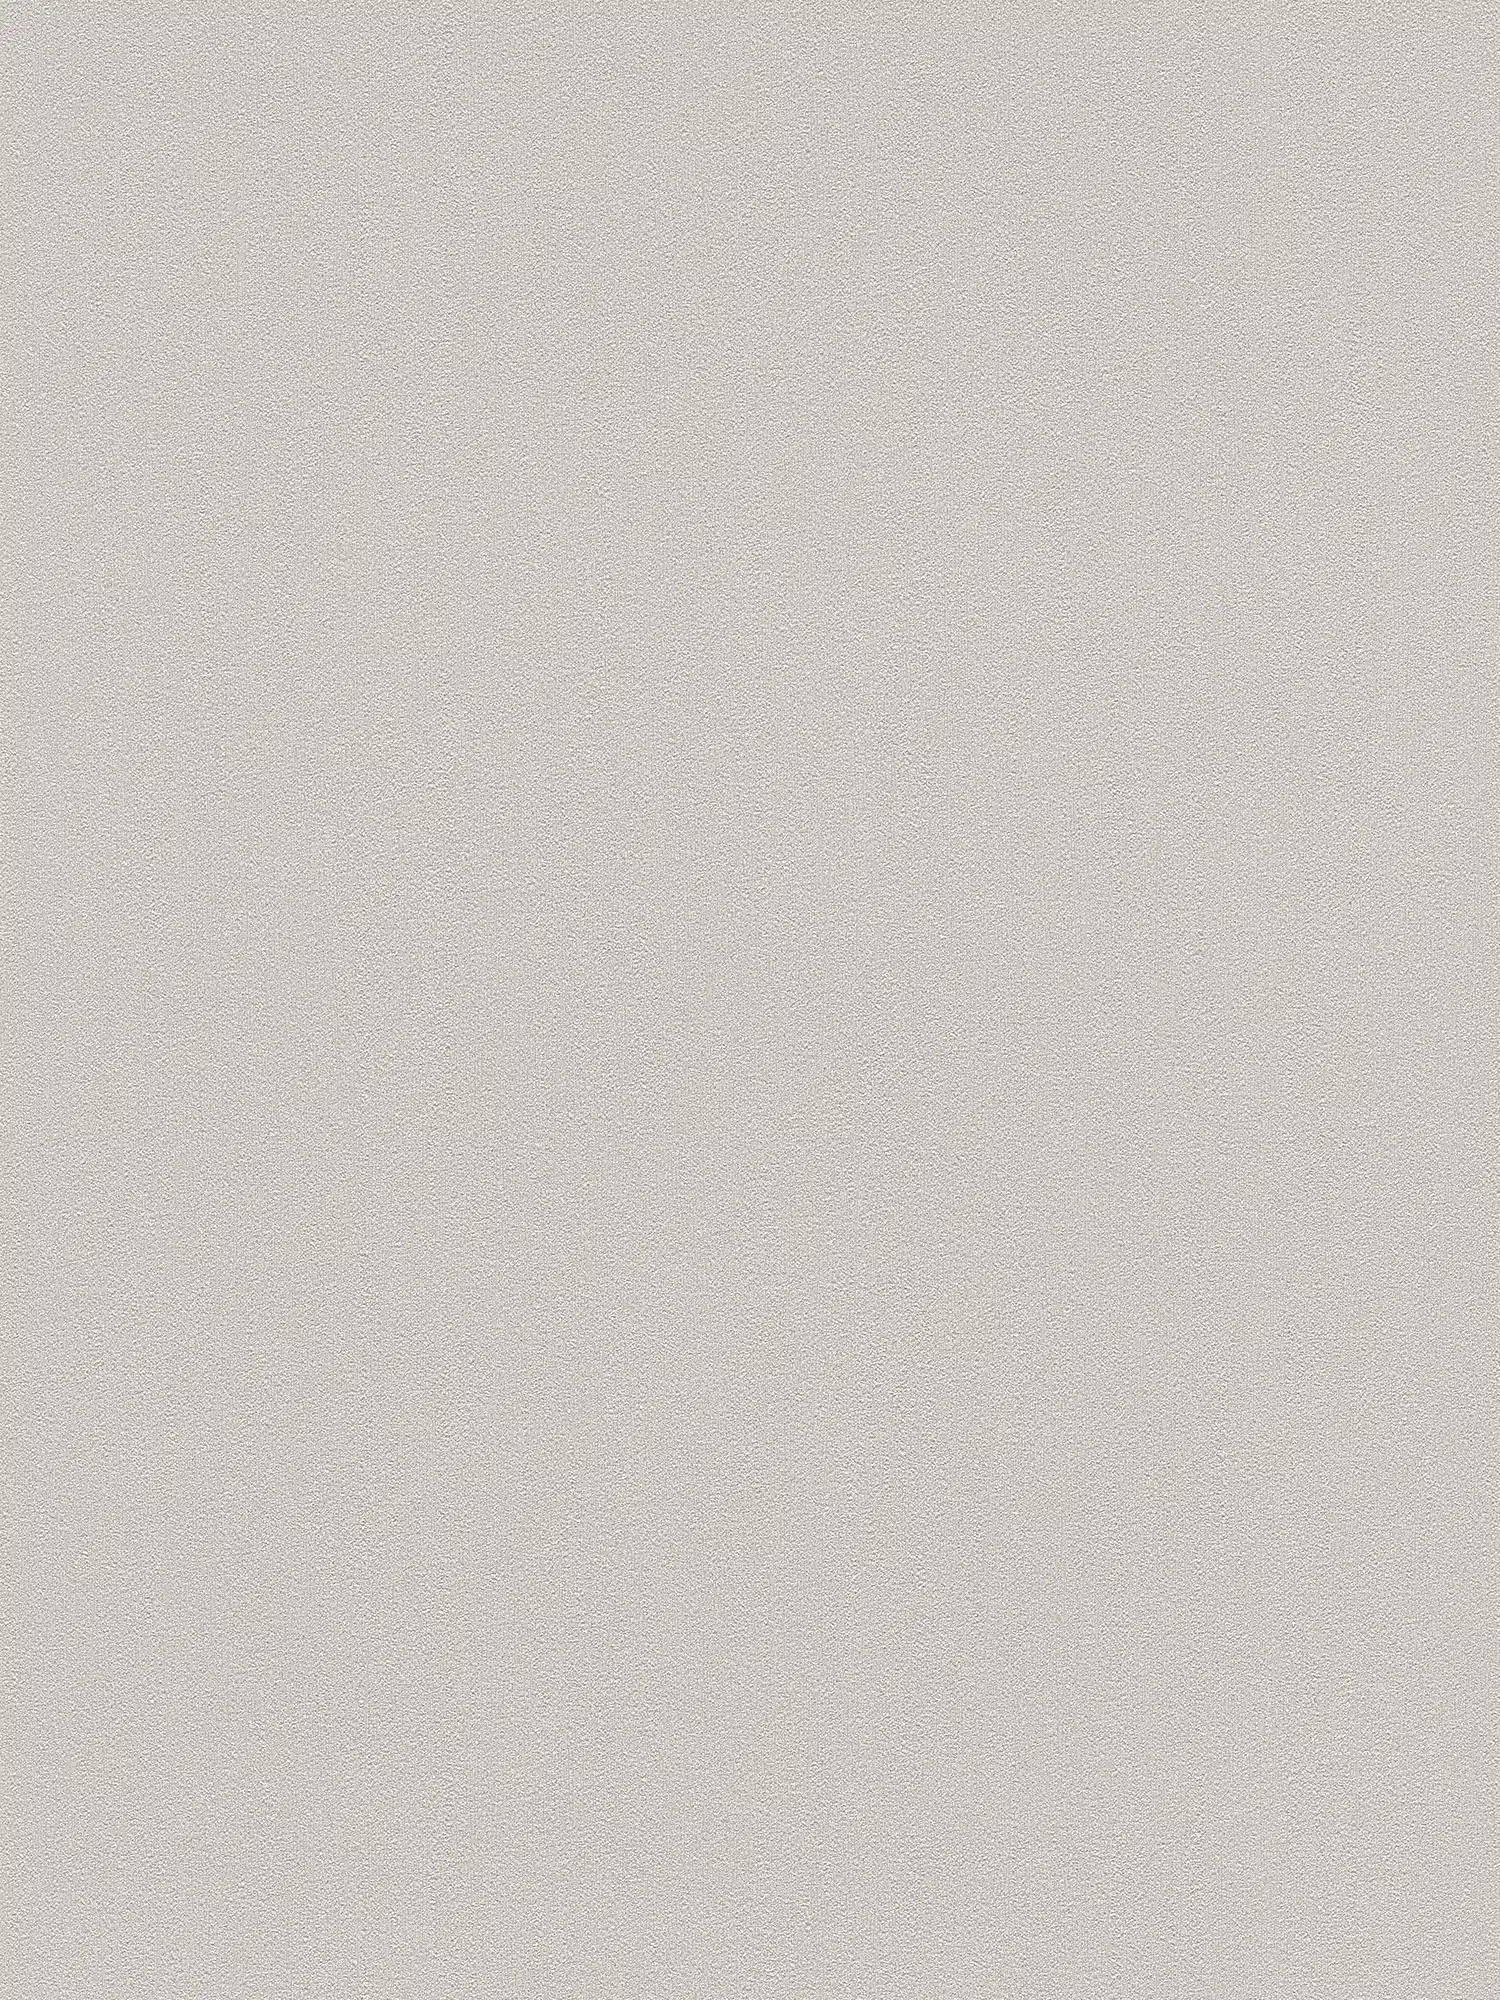 Wallpaper Karl LAGERFELD monochrome & embossed texture - grey
